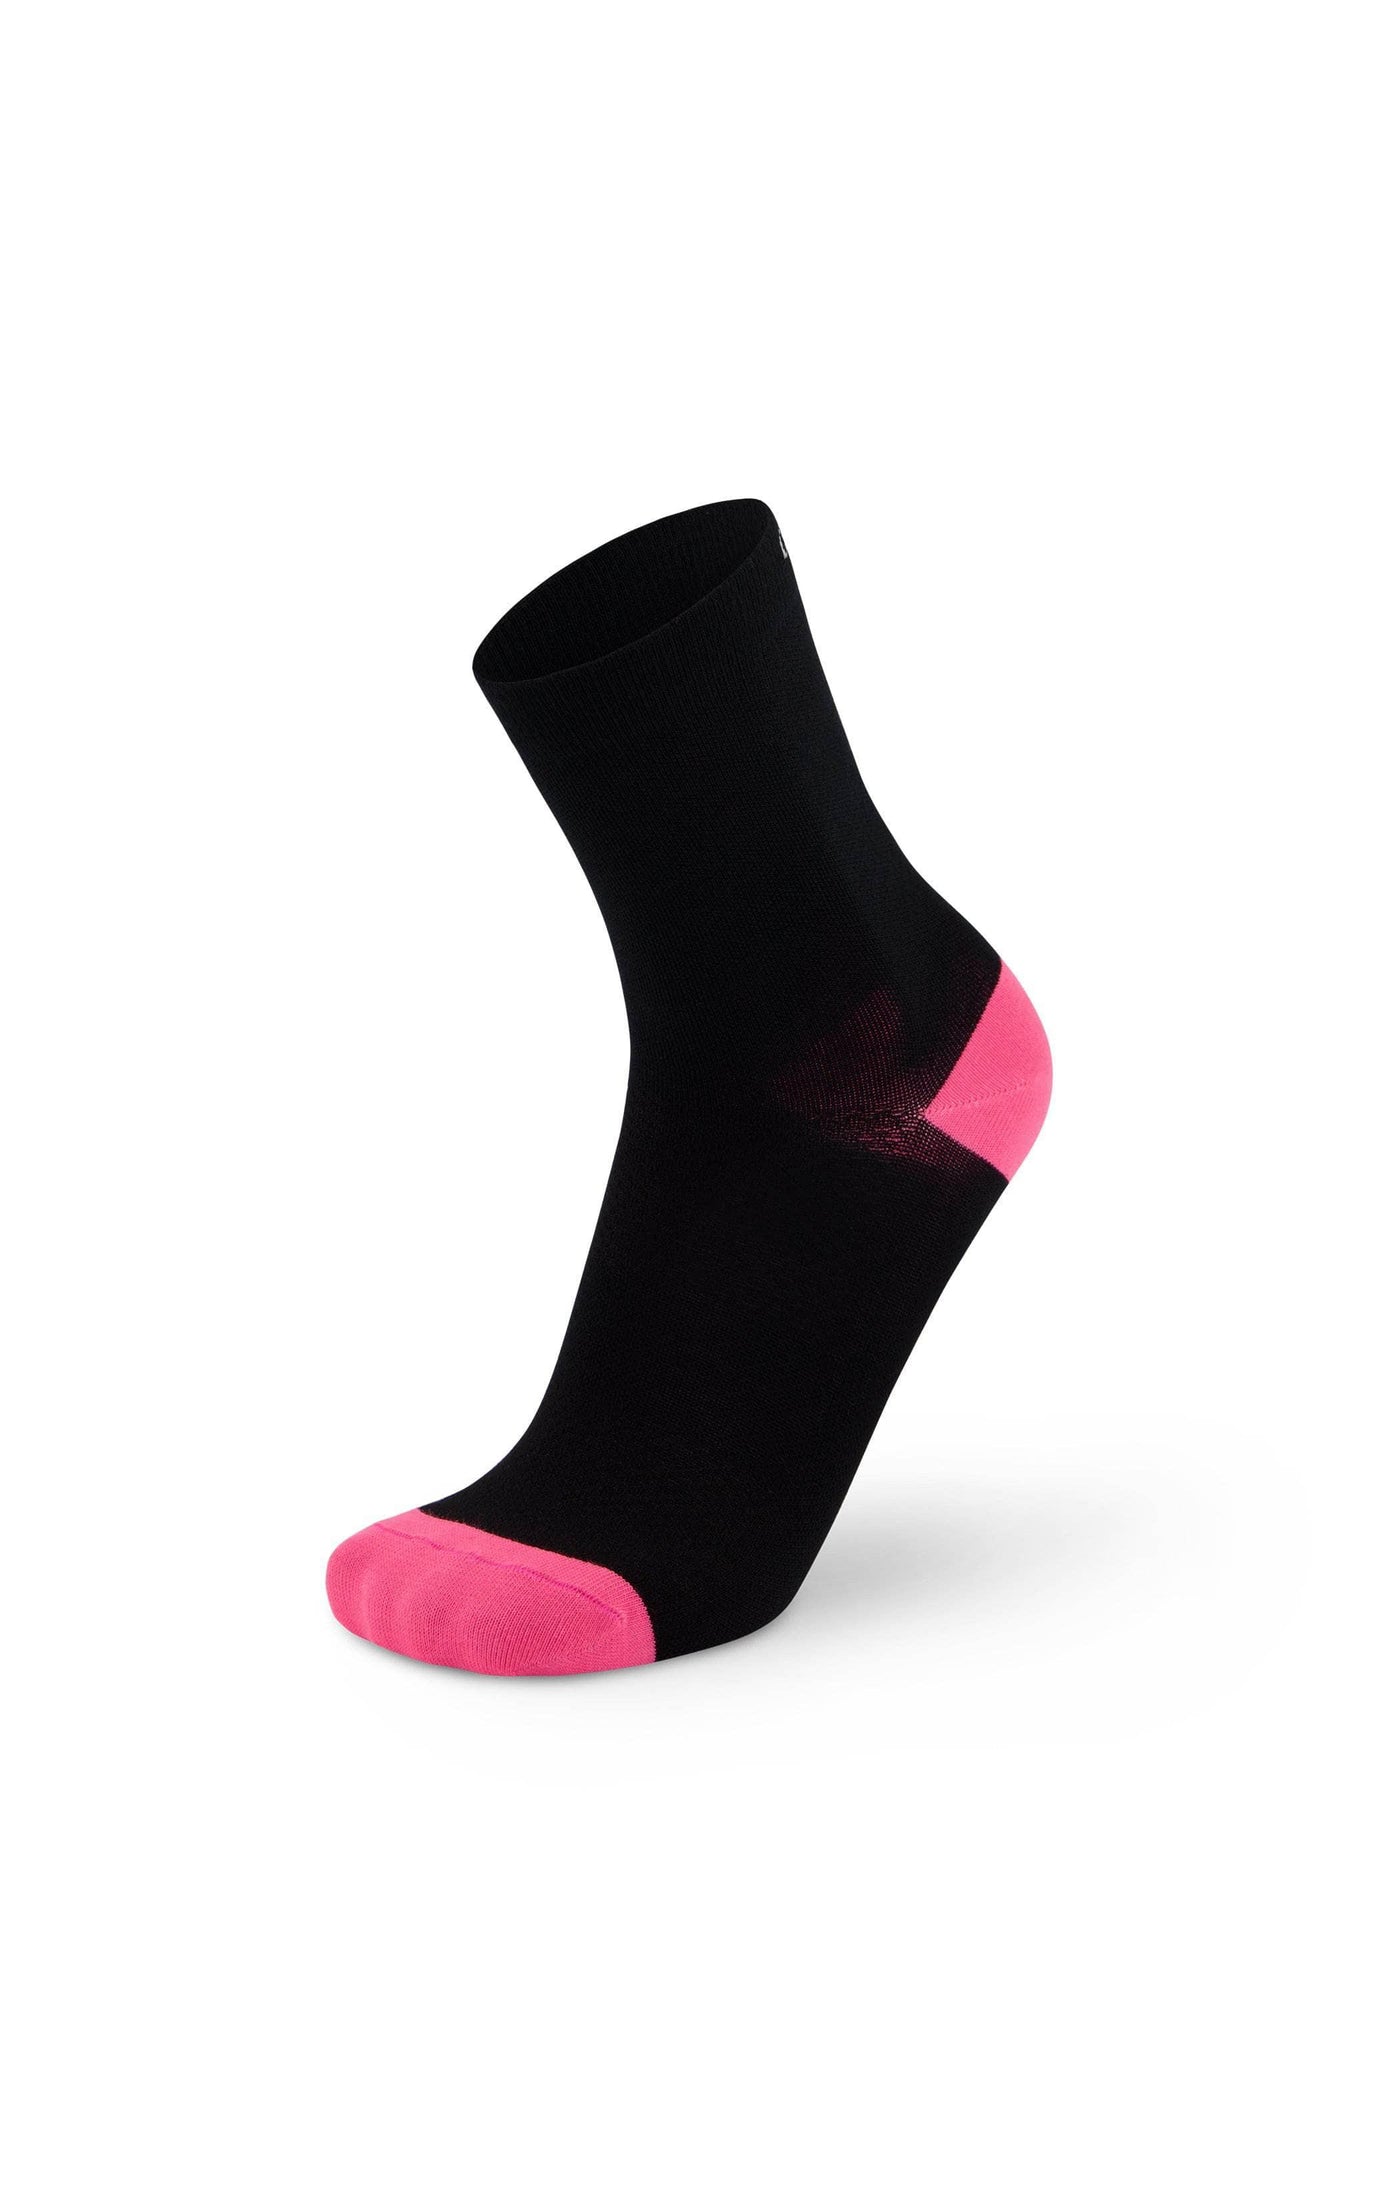 Ilabb Ilabb Performance Sock Black/Pink / S